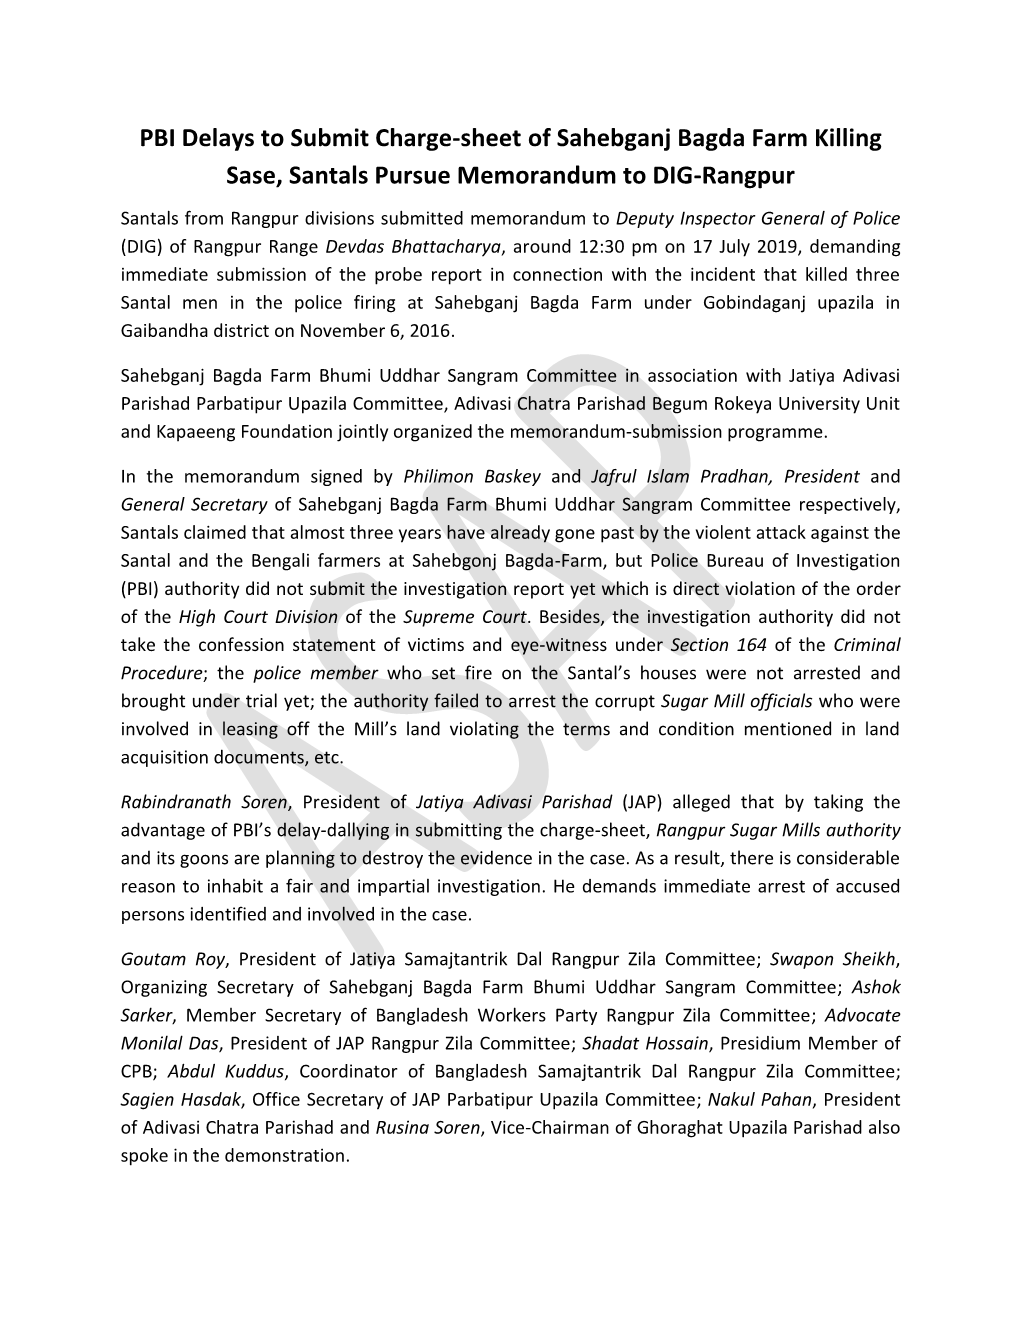 PBI Delays to Submit Charge-Sheet of Sahebganj Bagda Farm